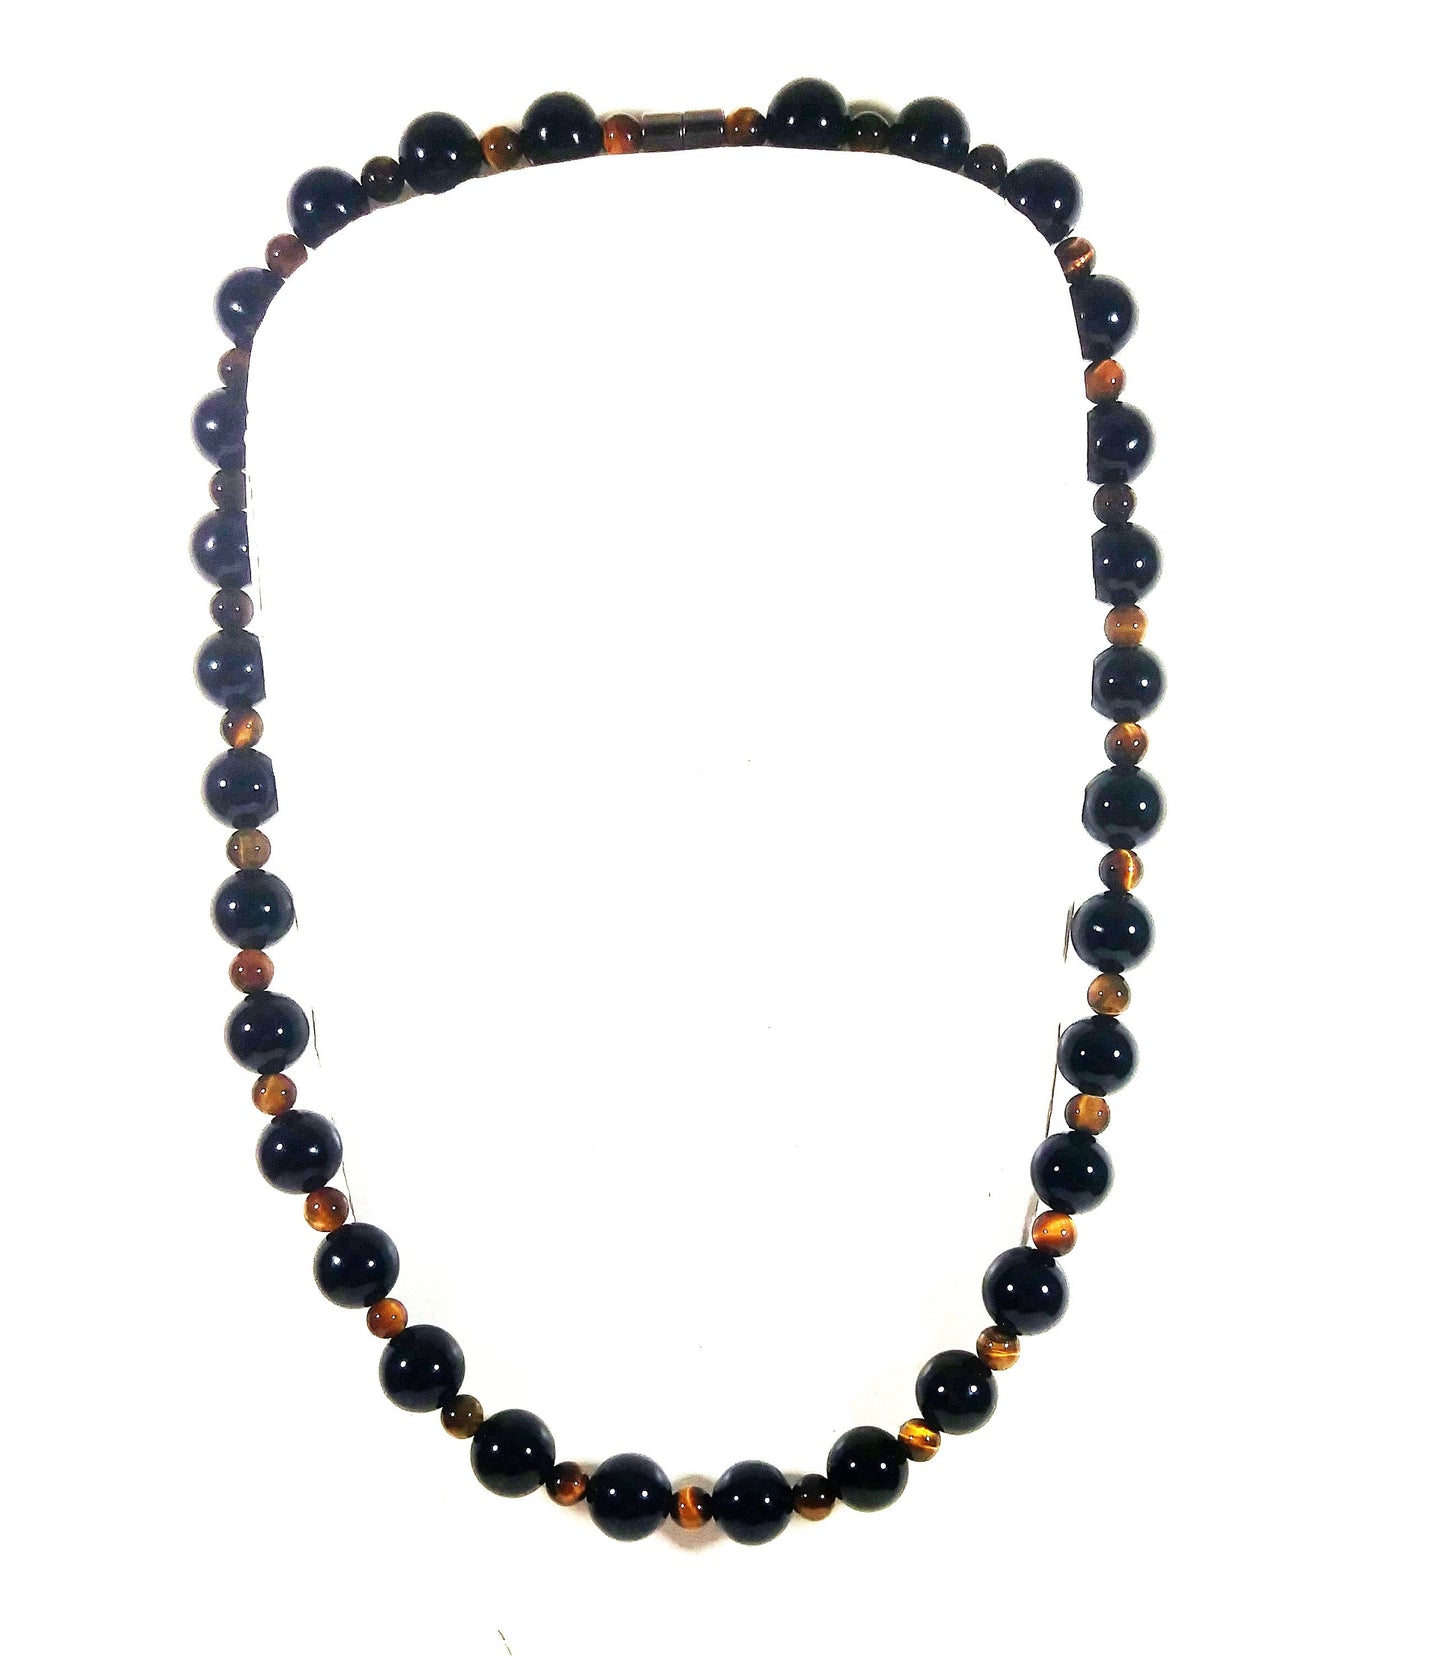 Black Onyx Necklace -  Tiger Eye Necklace For Men - Protection Necklace - Crystal necklace - Gemstone Necklace